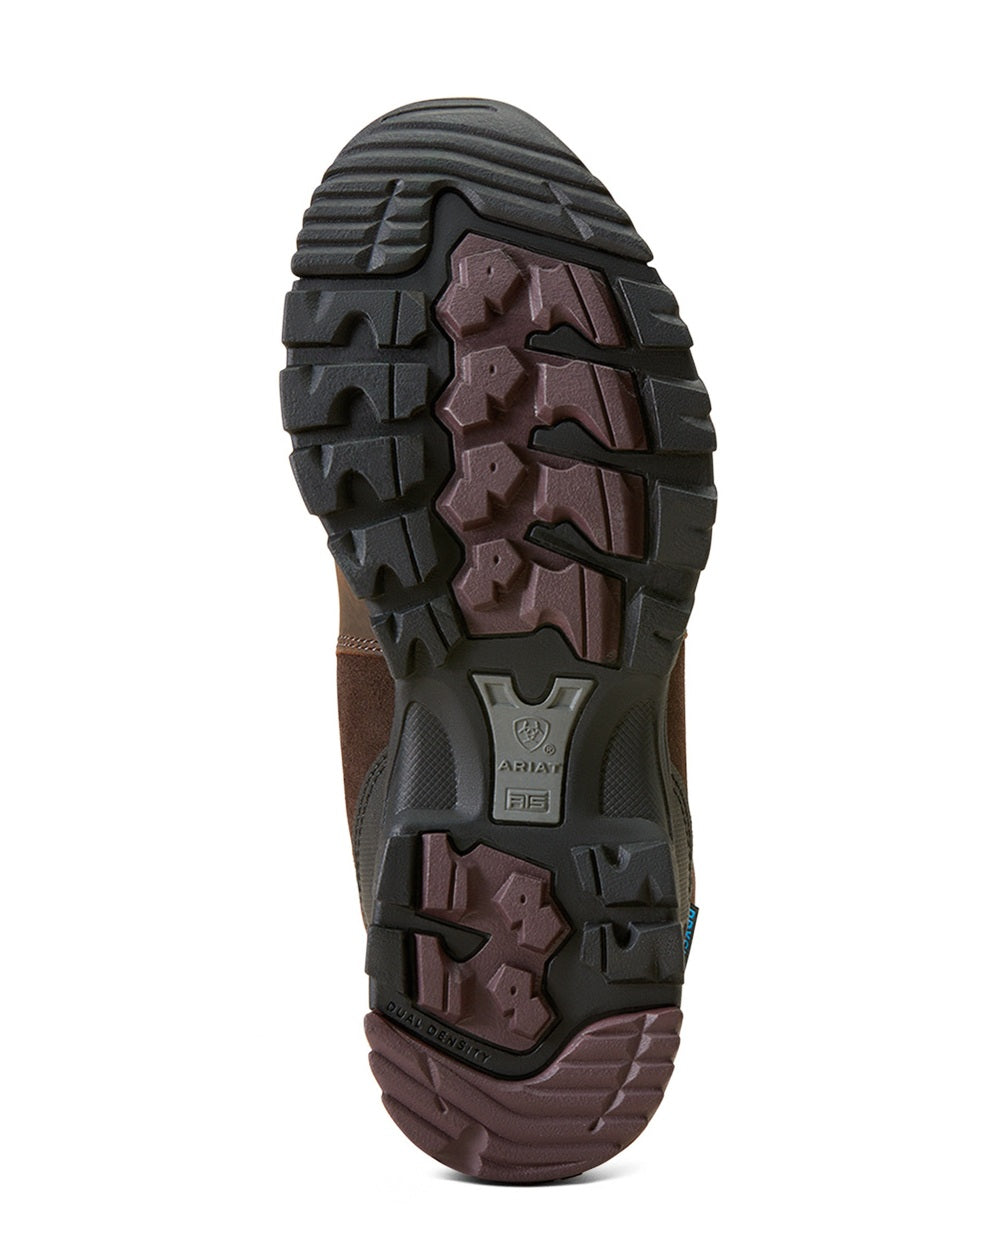 Ariat Womens Skyline Mid Waterproof Boots in Chocolate Brown 